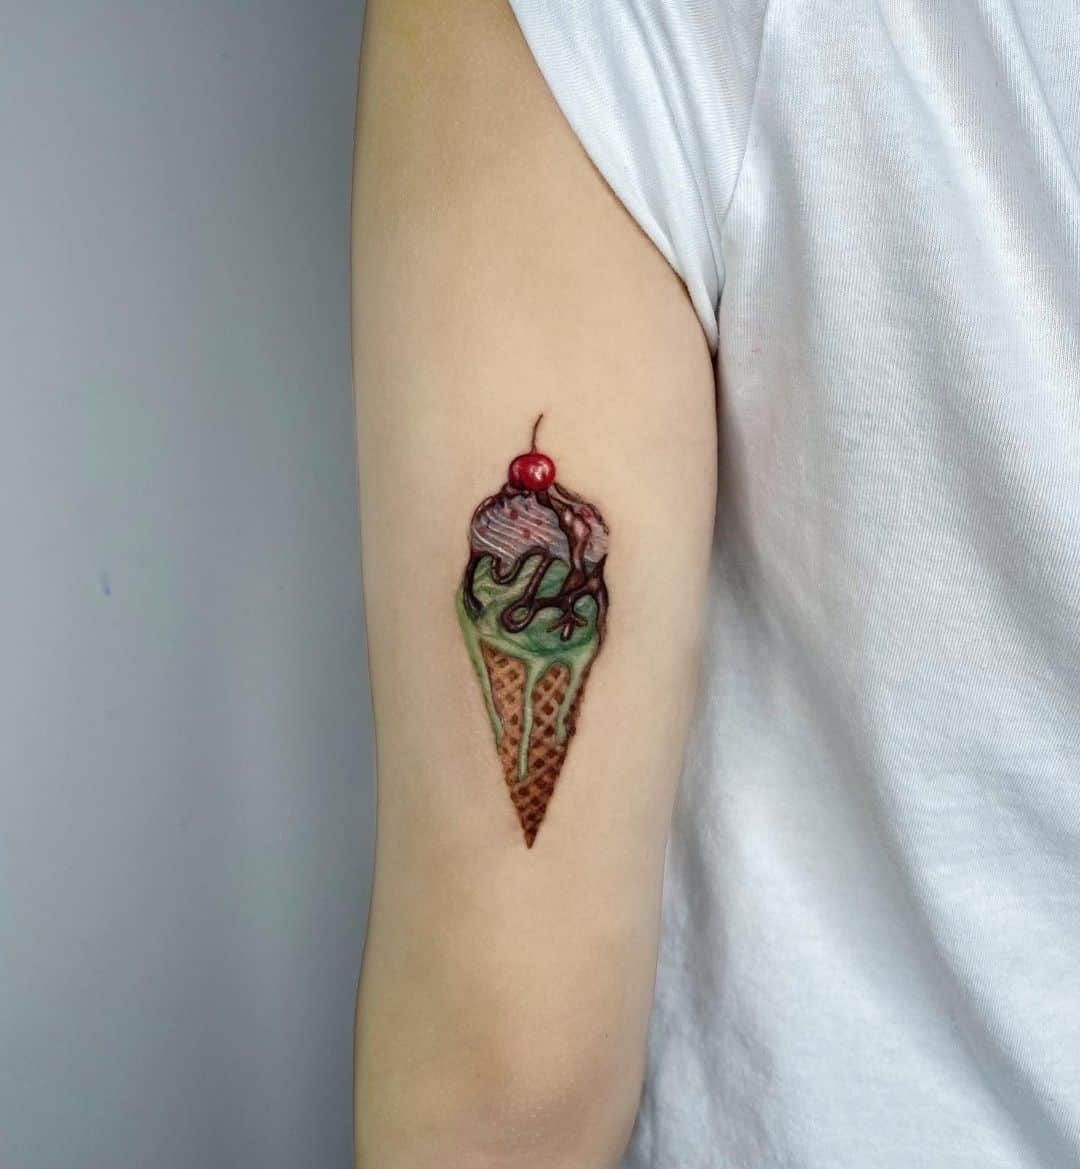 Icecream tattoo by melikeylldiz